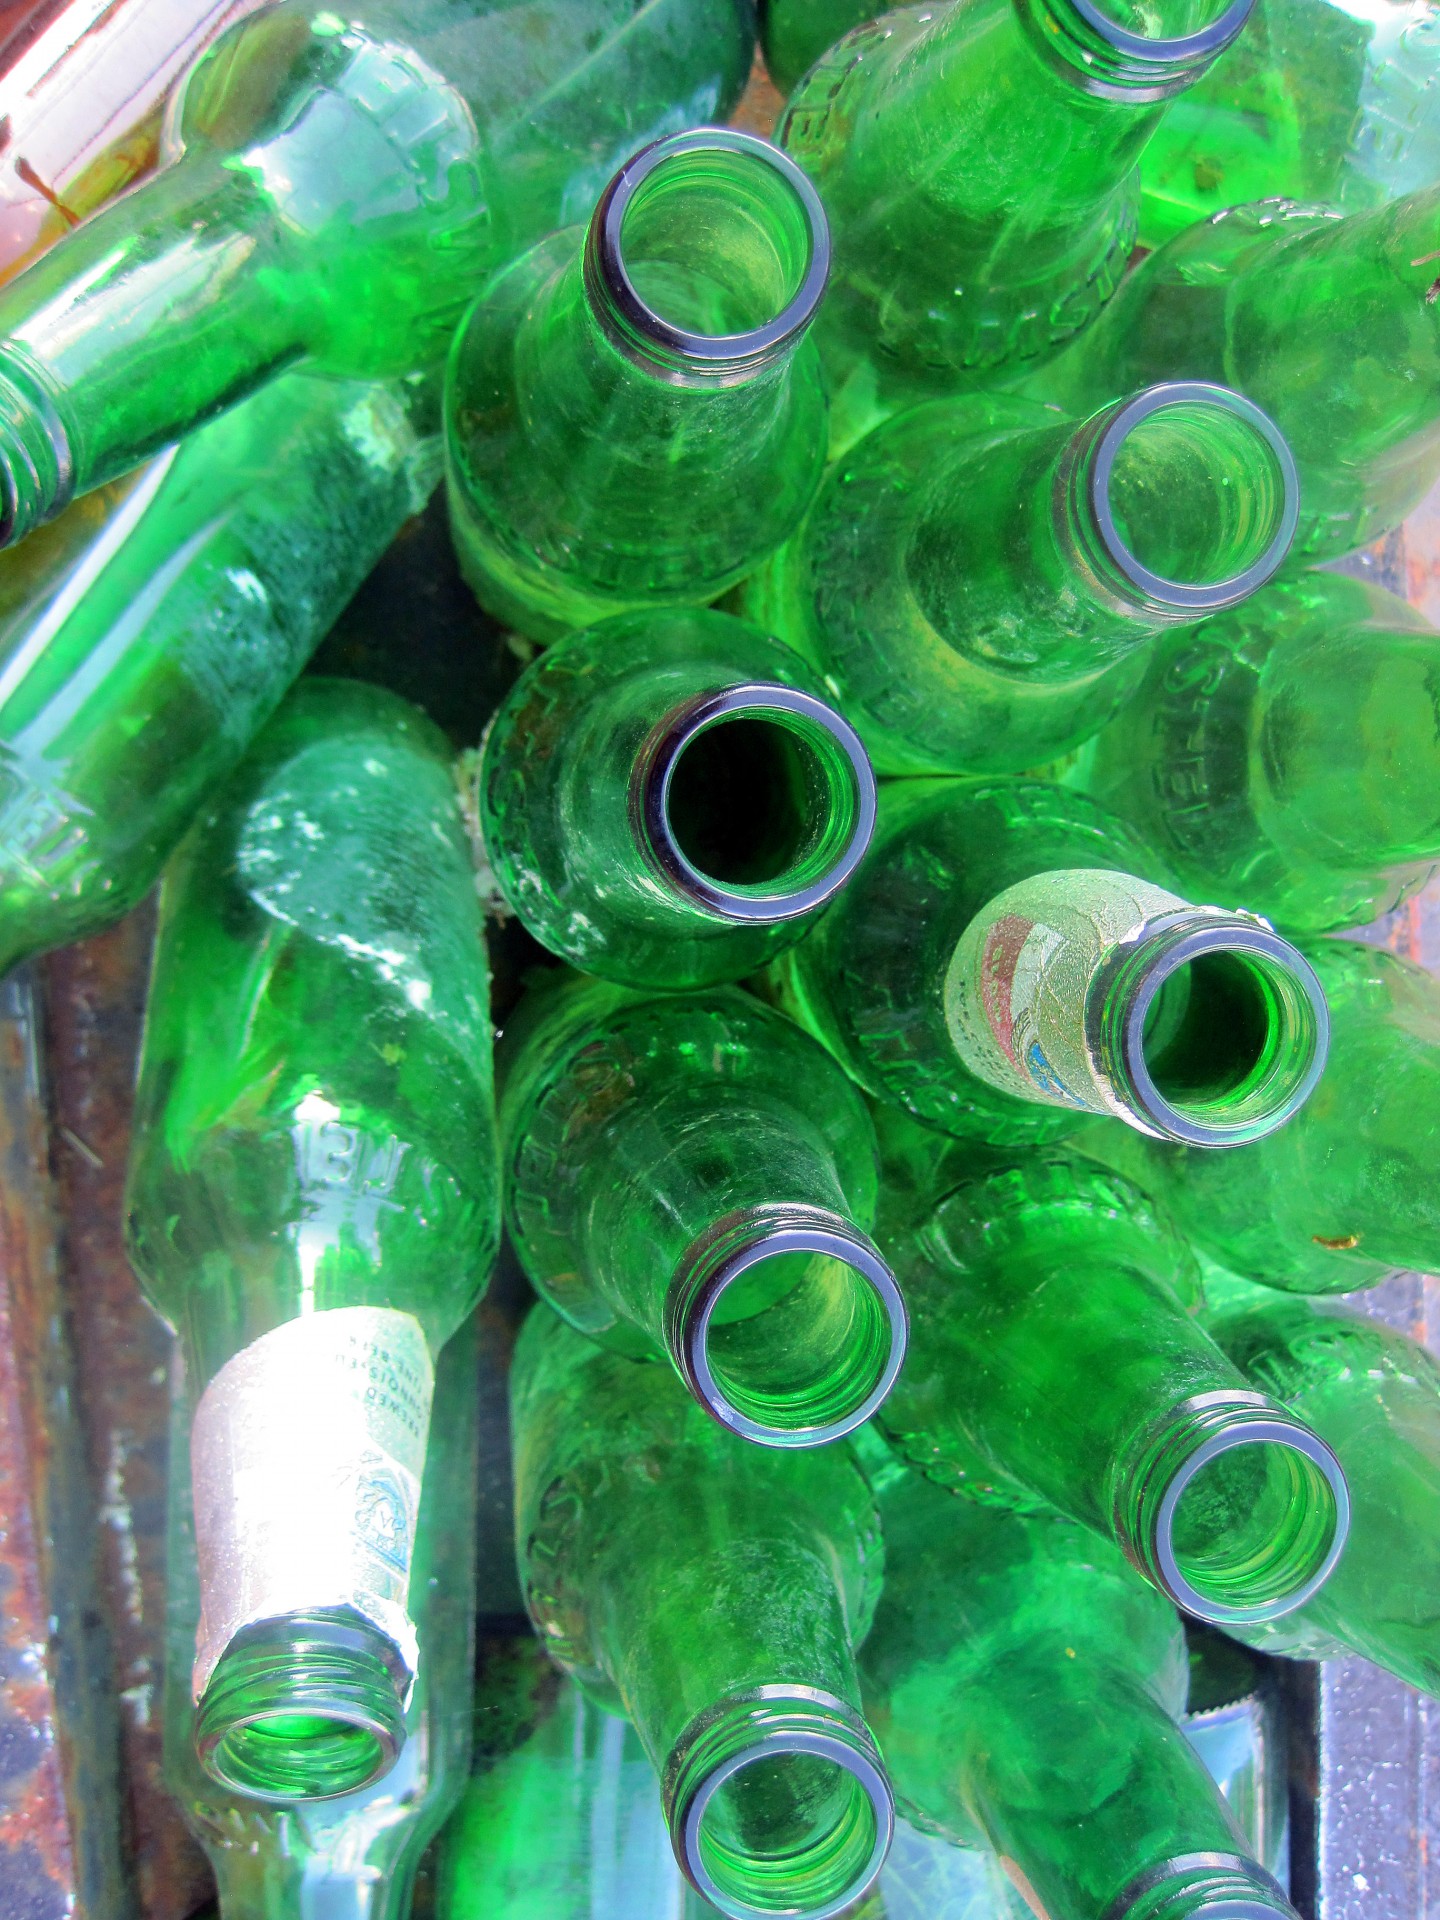 Discarded Green Bottles